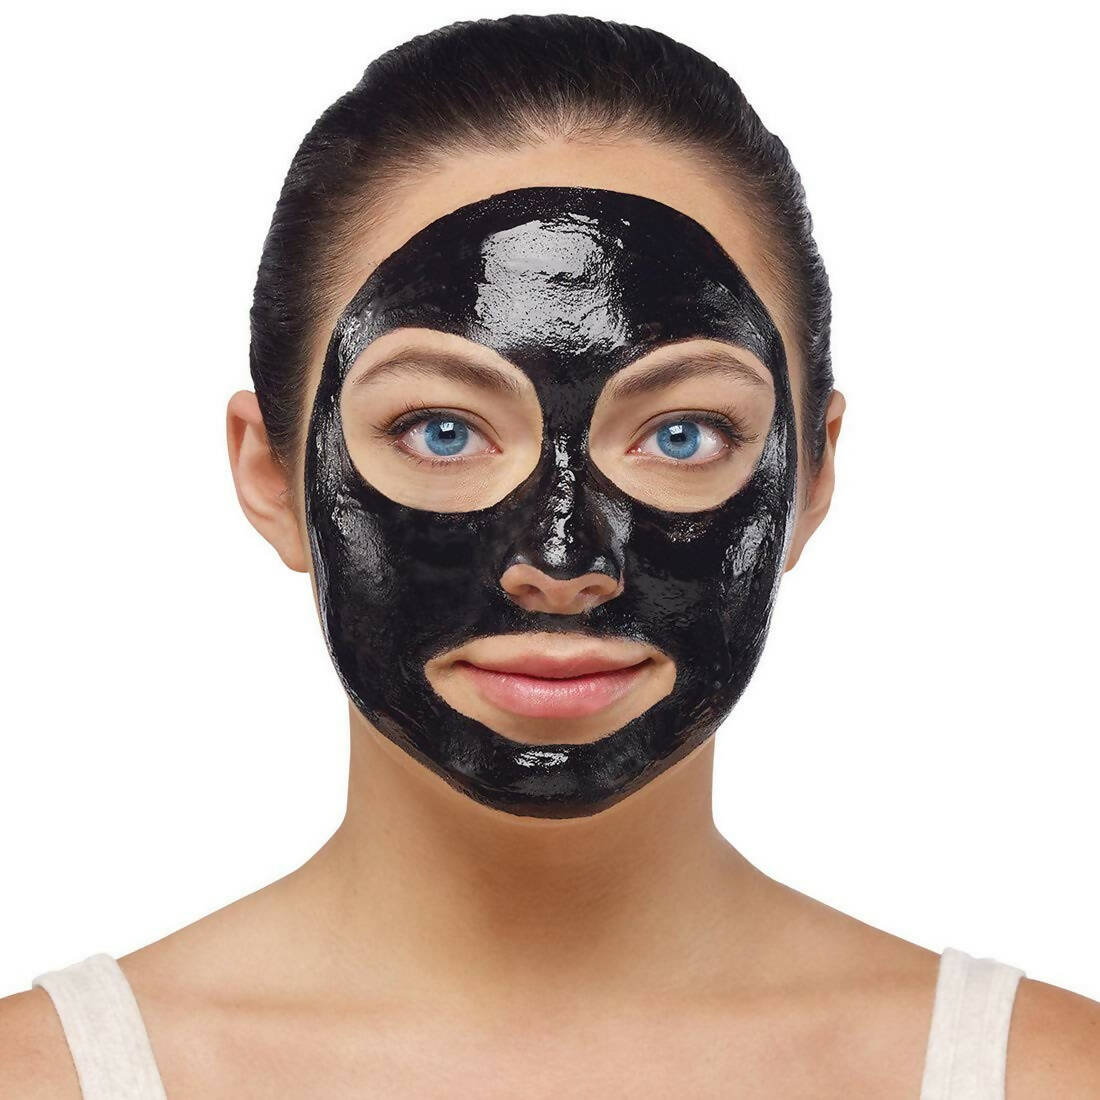 Maliao Professional Black Peel-Off Mask